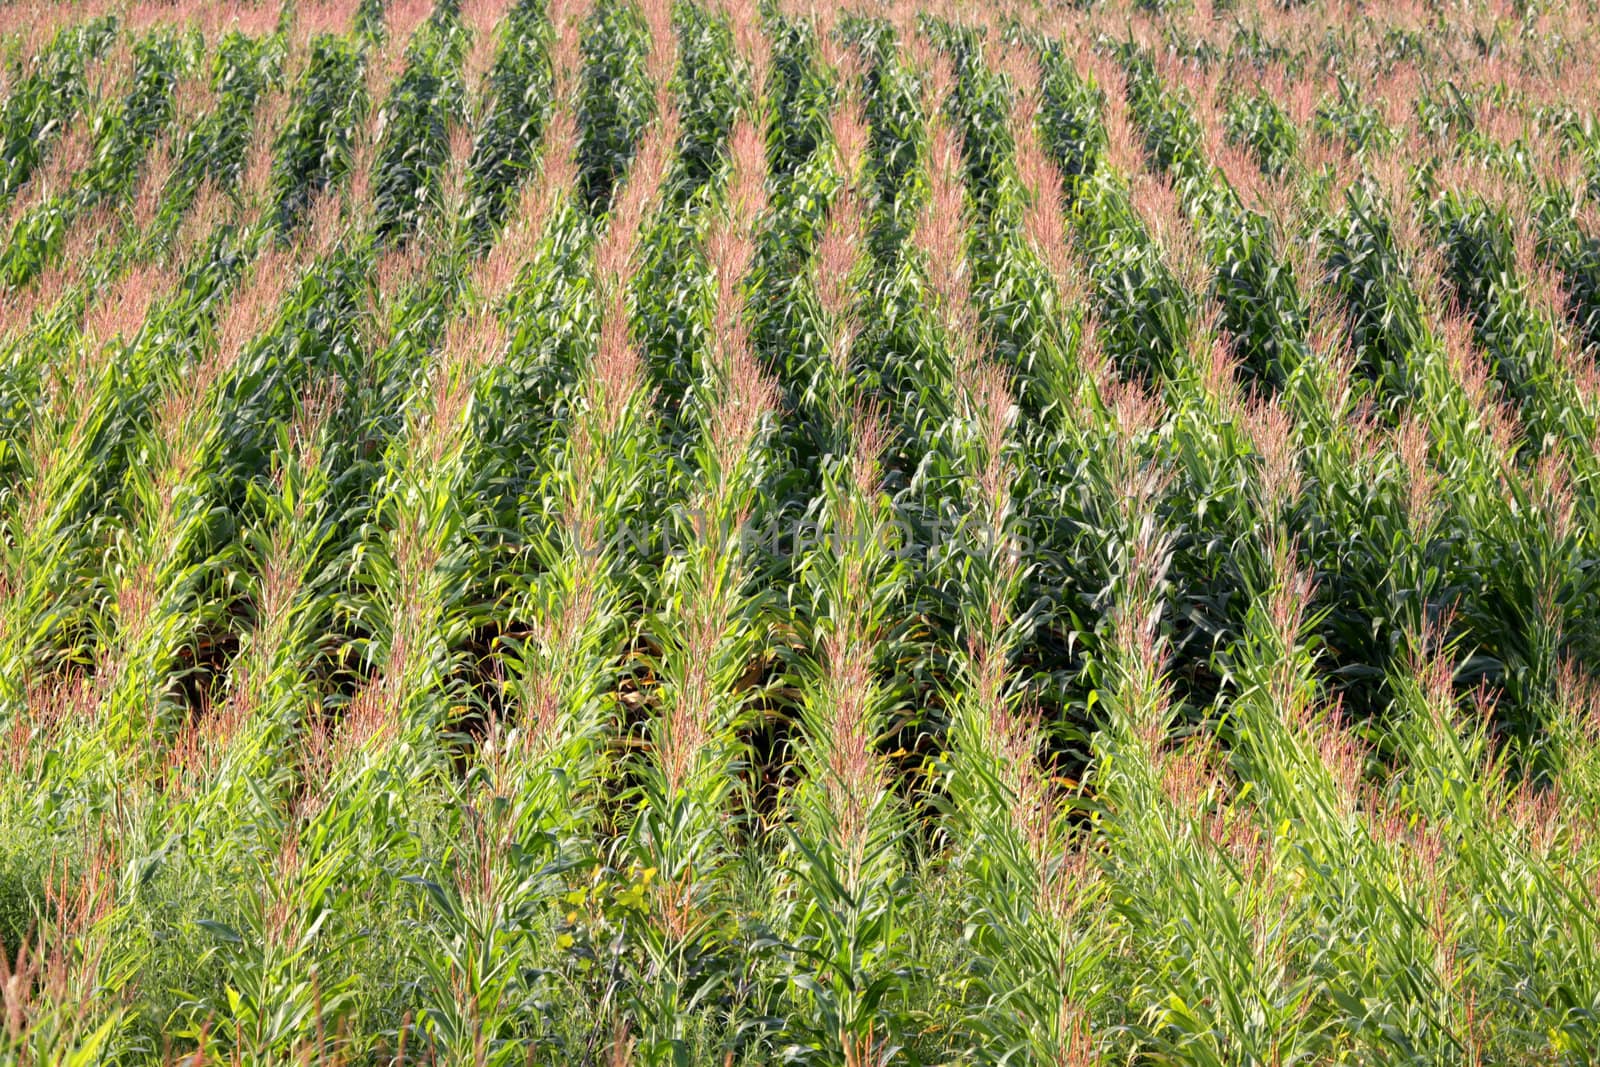 Rows of corn stalks in a large corn field.